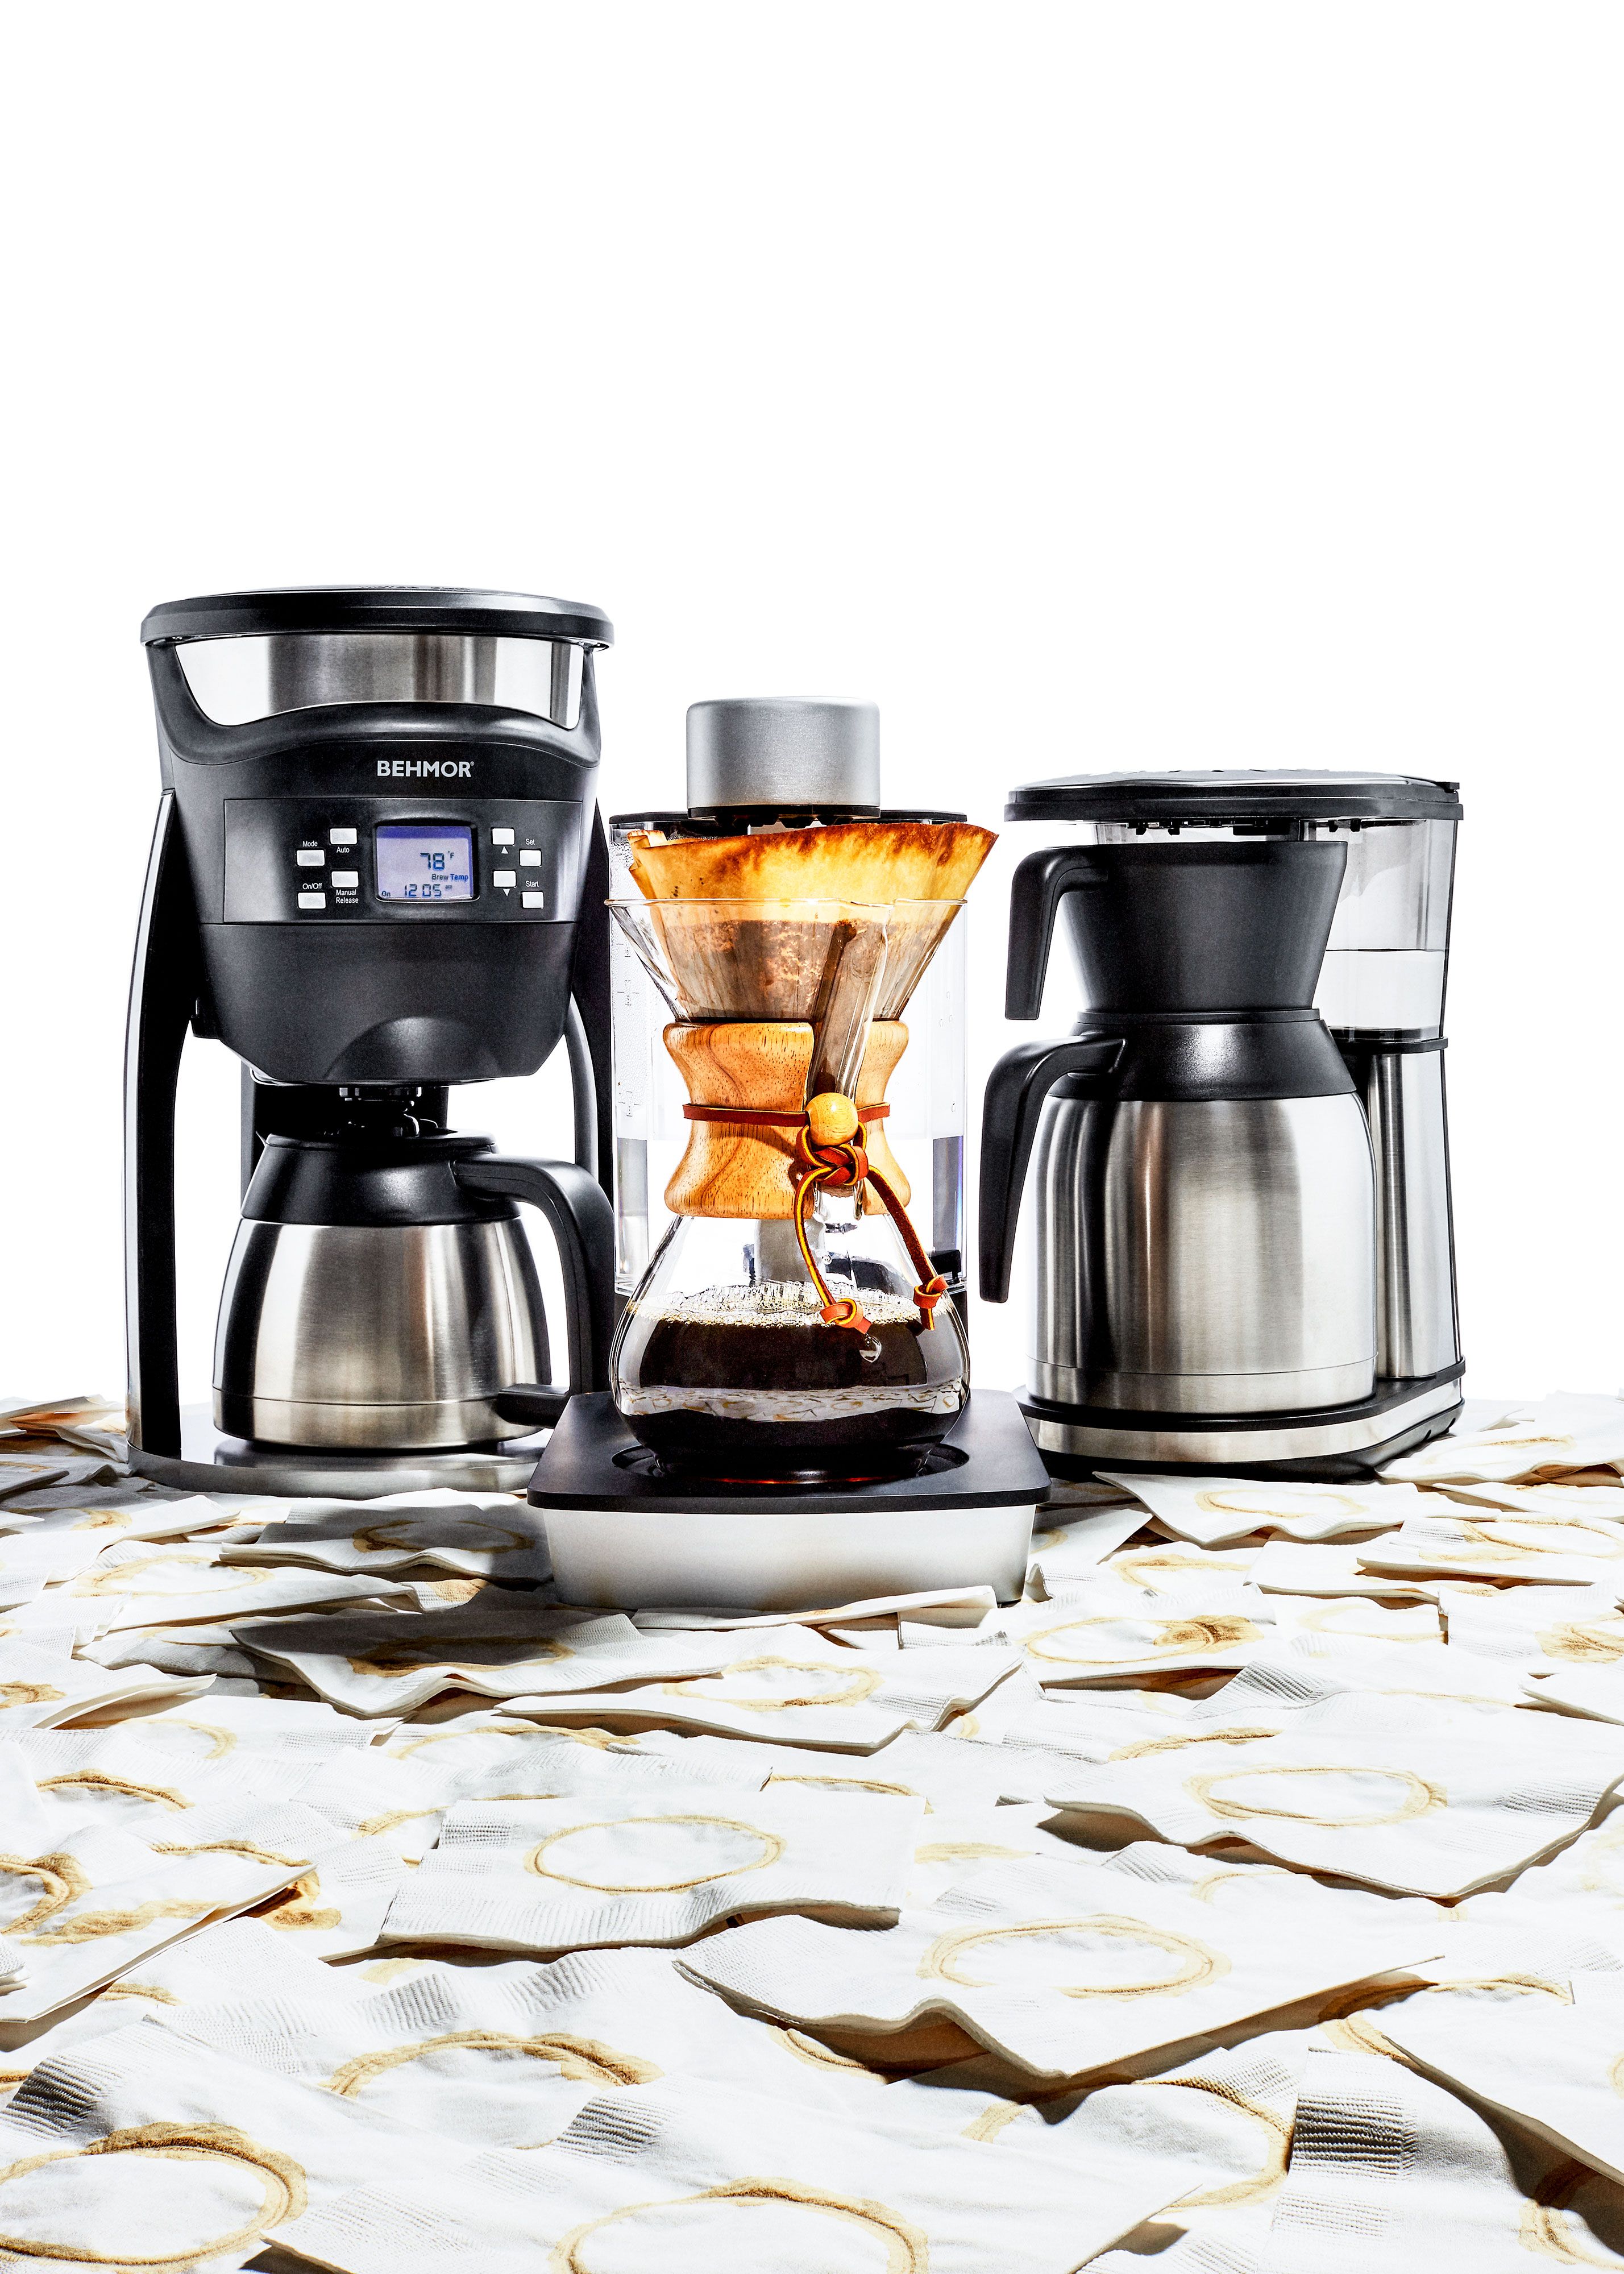 Behmor Brazen Plus Coffee Maker Review